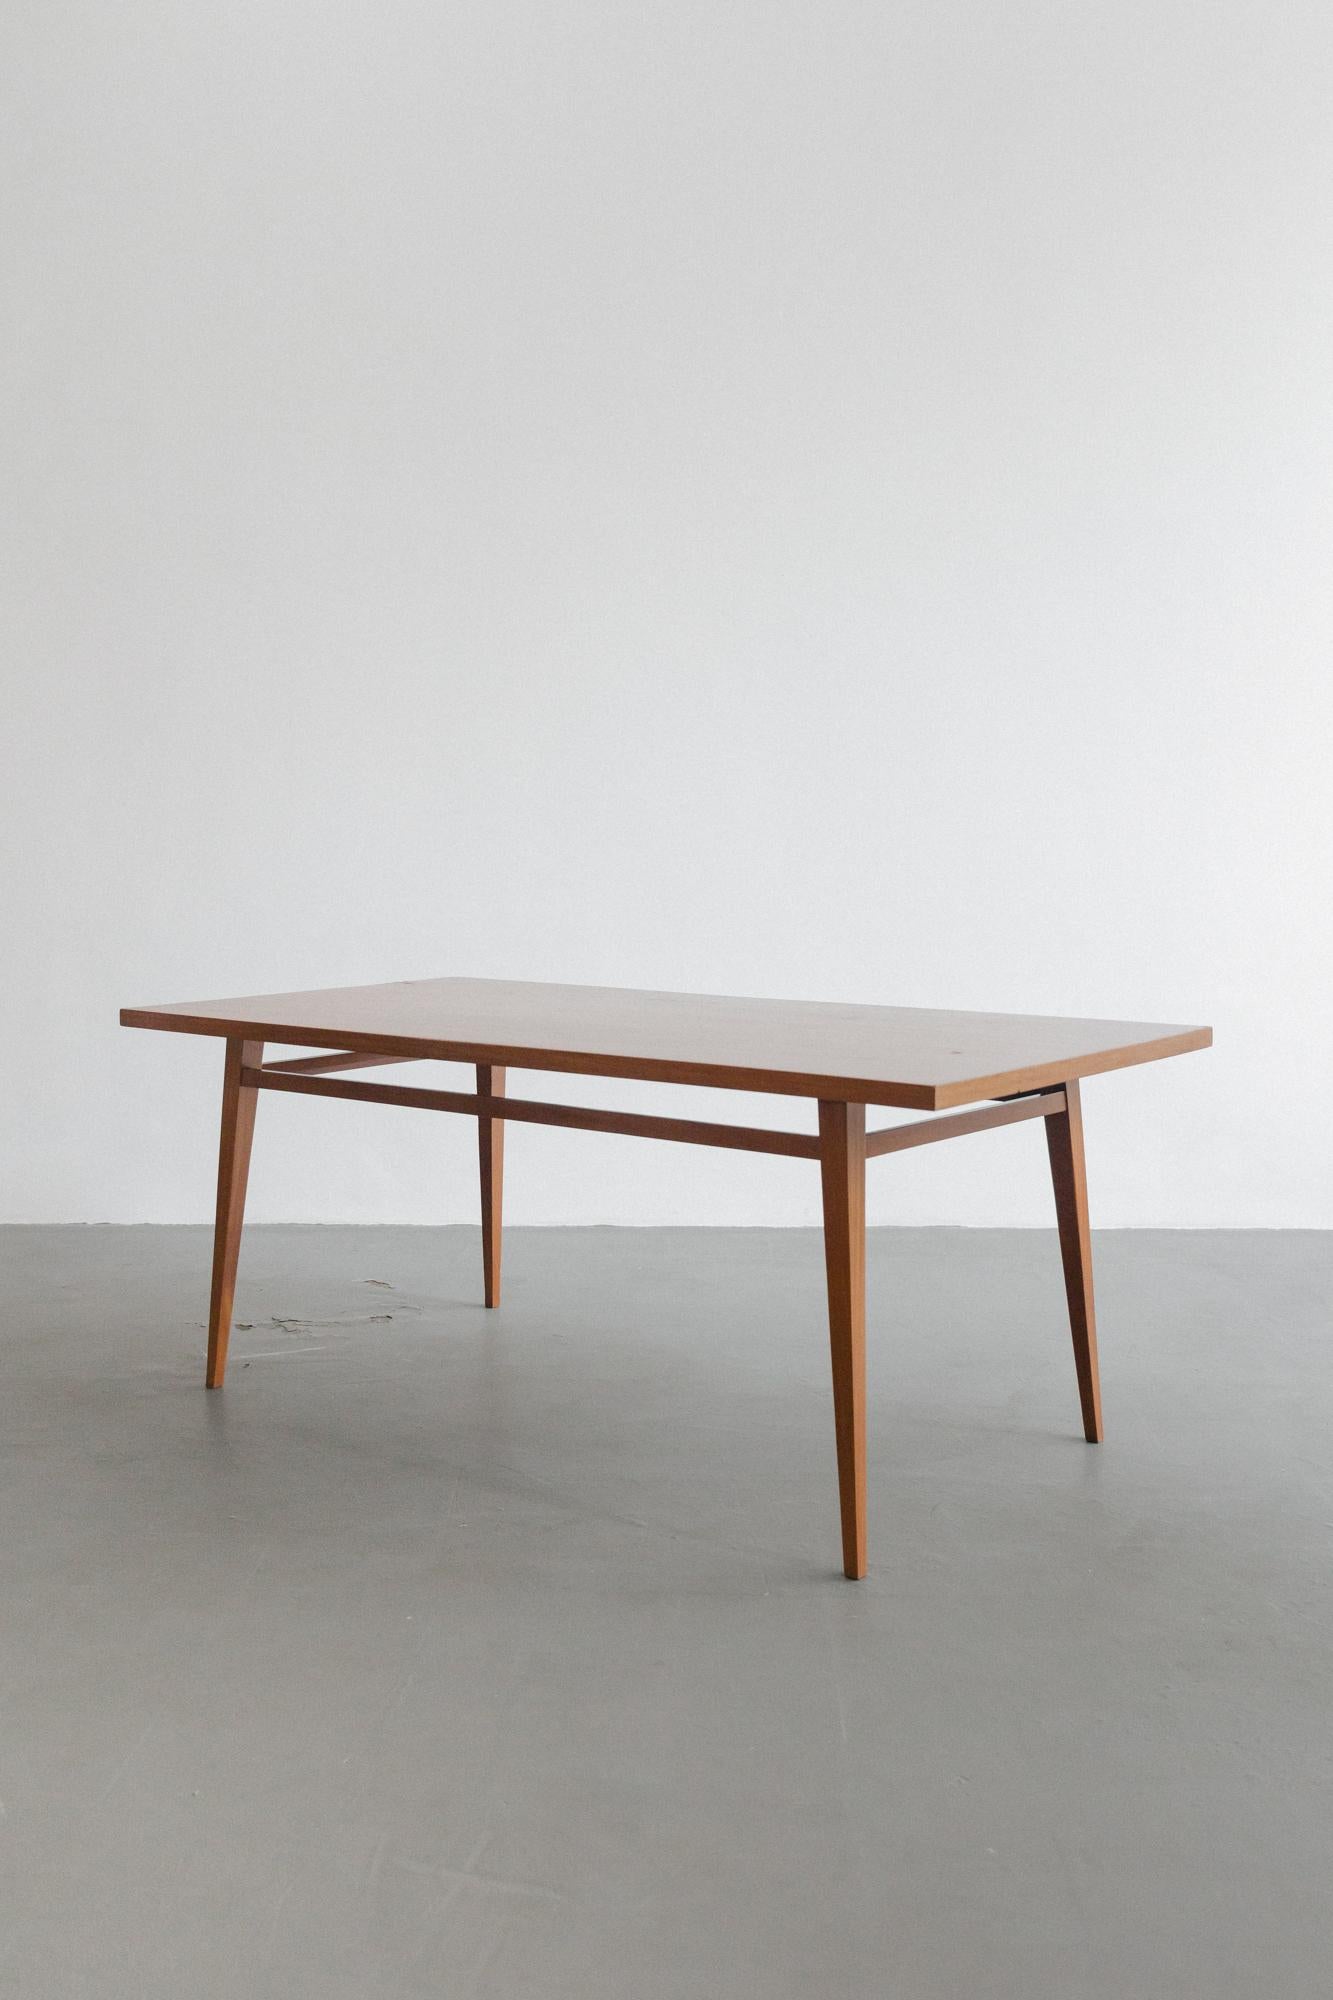 Mid-20th Century Brazilian Hardwood Table by Joaquim Tenreiro, 1947, Midcentury Design For Sale